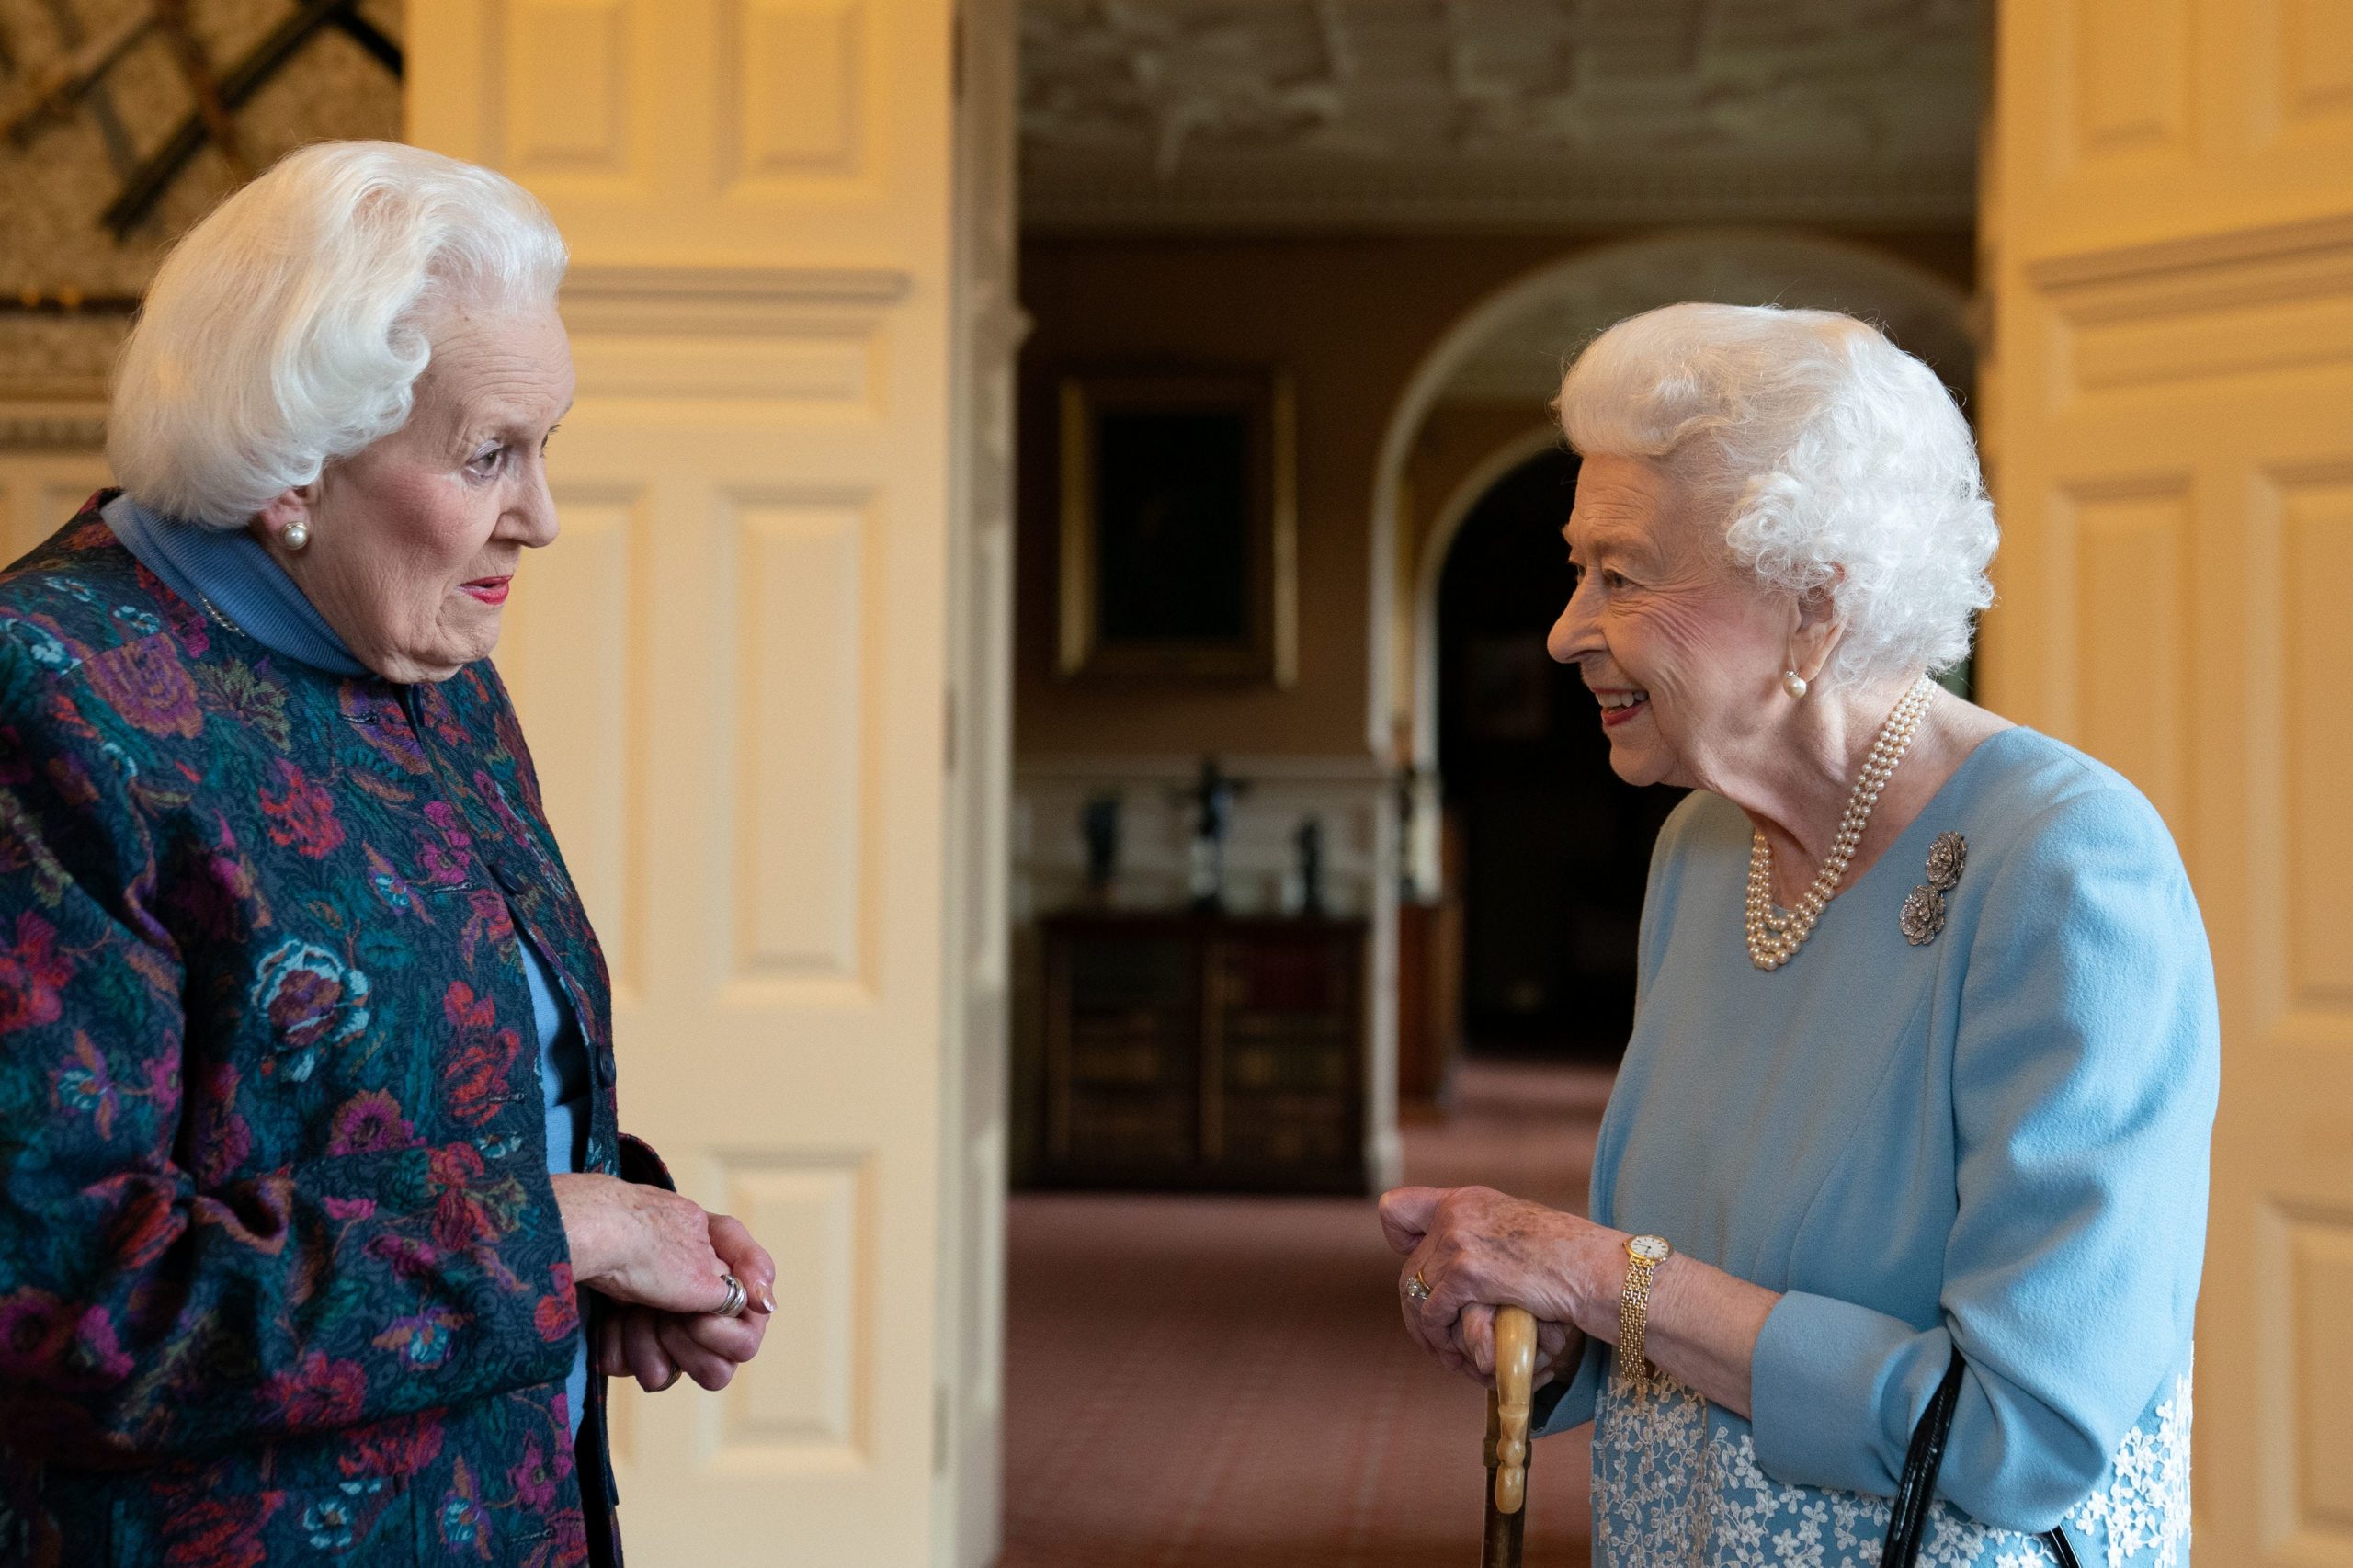 Queen Elizabeth and Angela Wood talking at Sandringham House